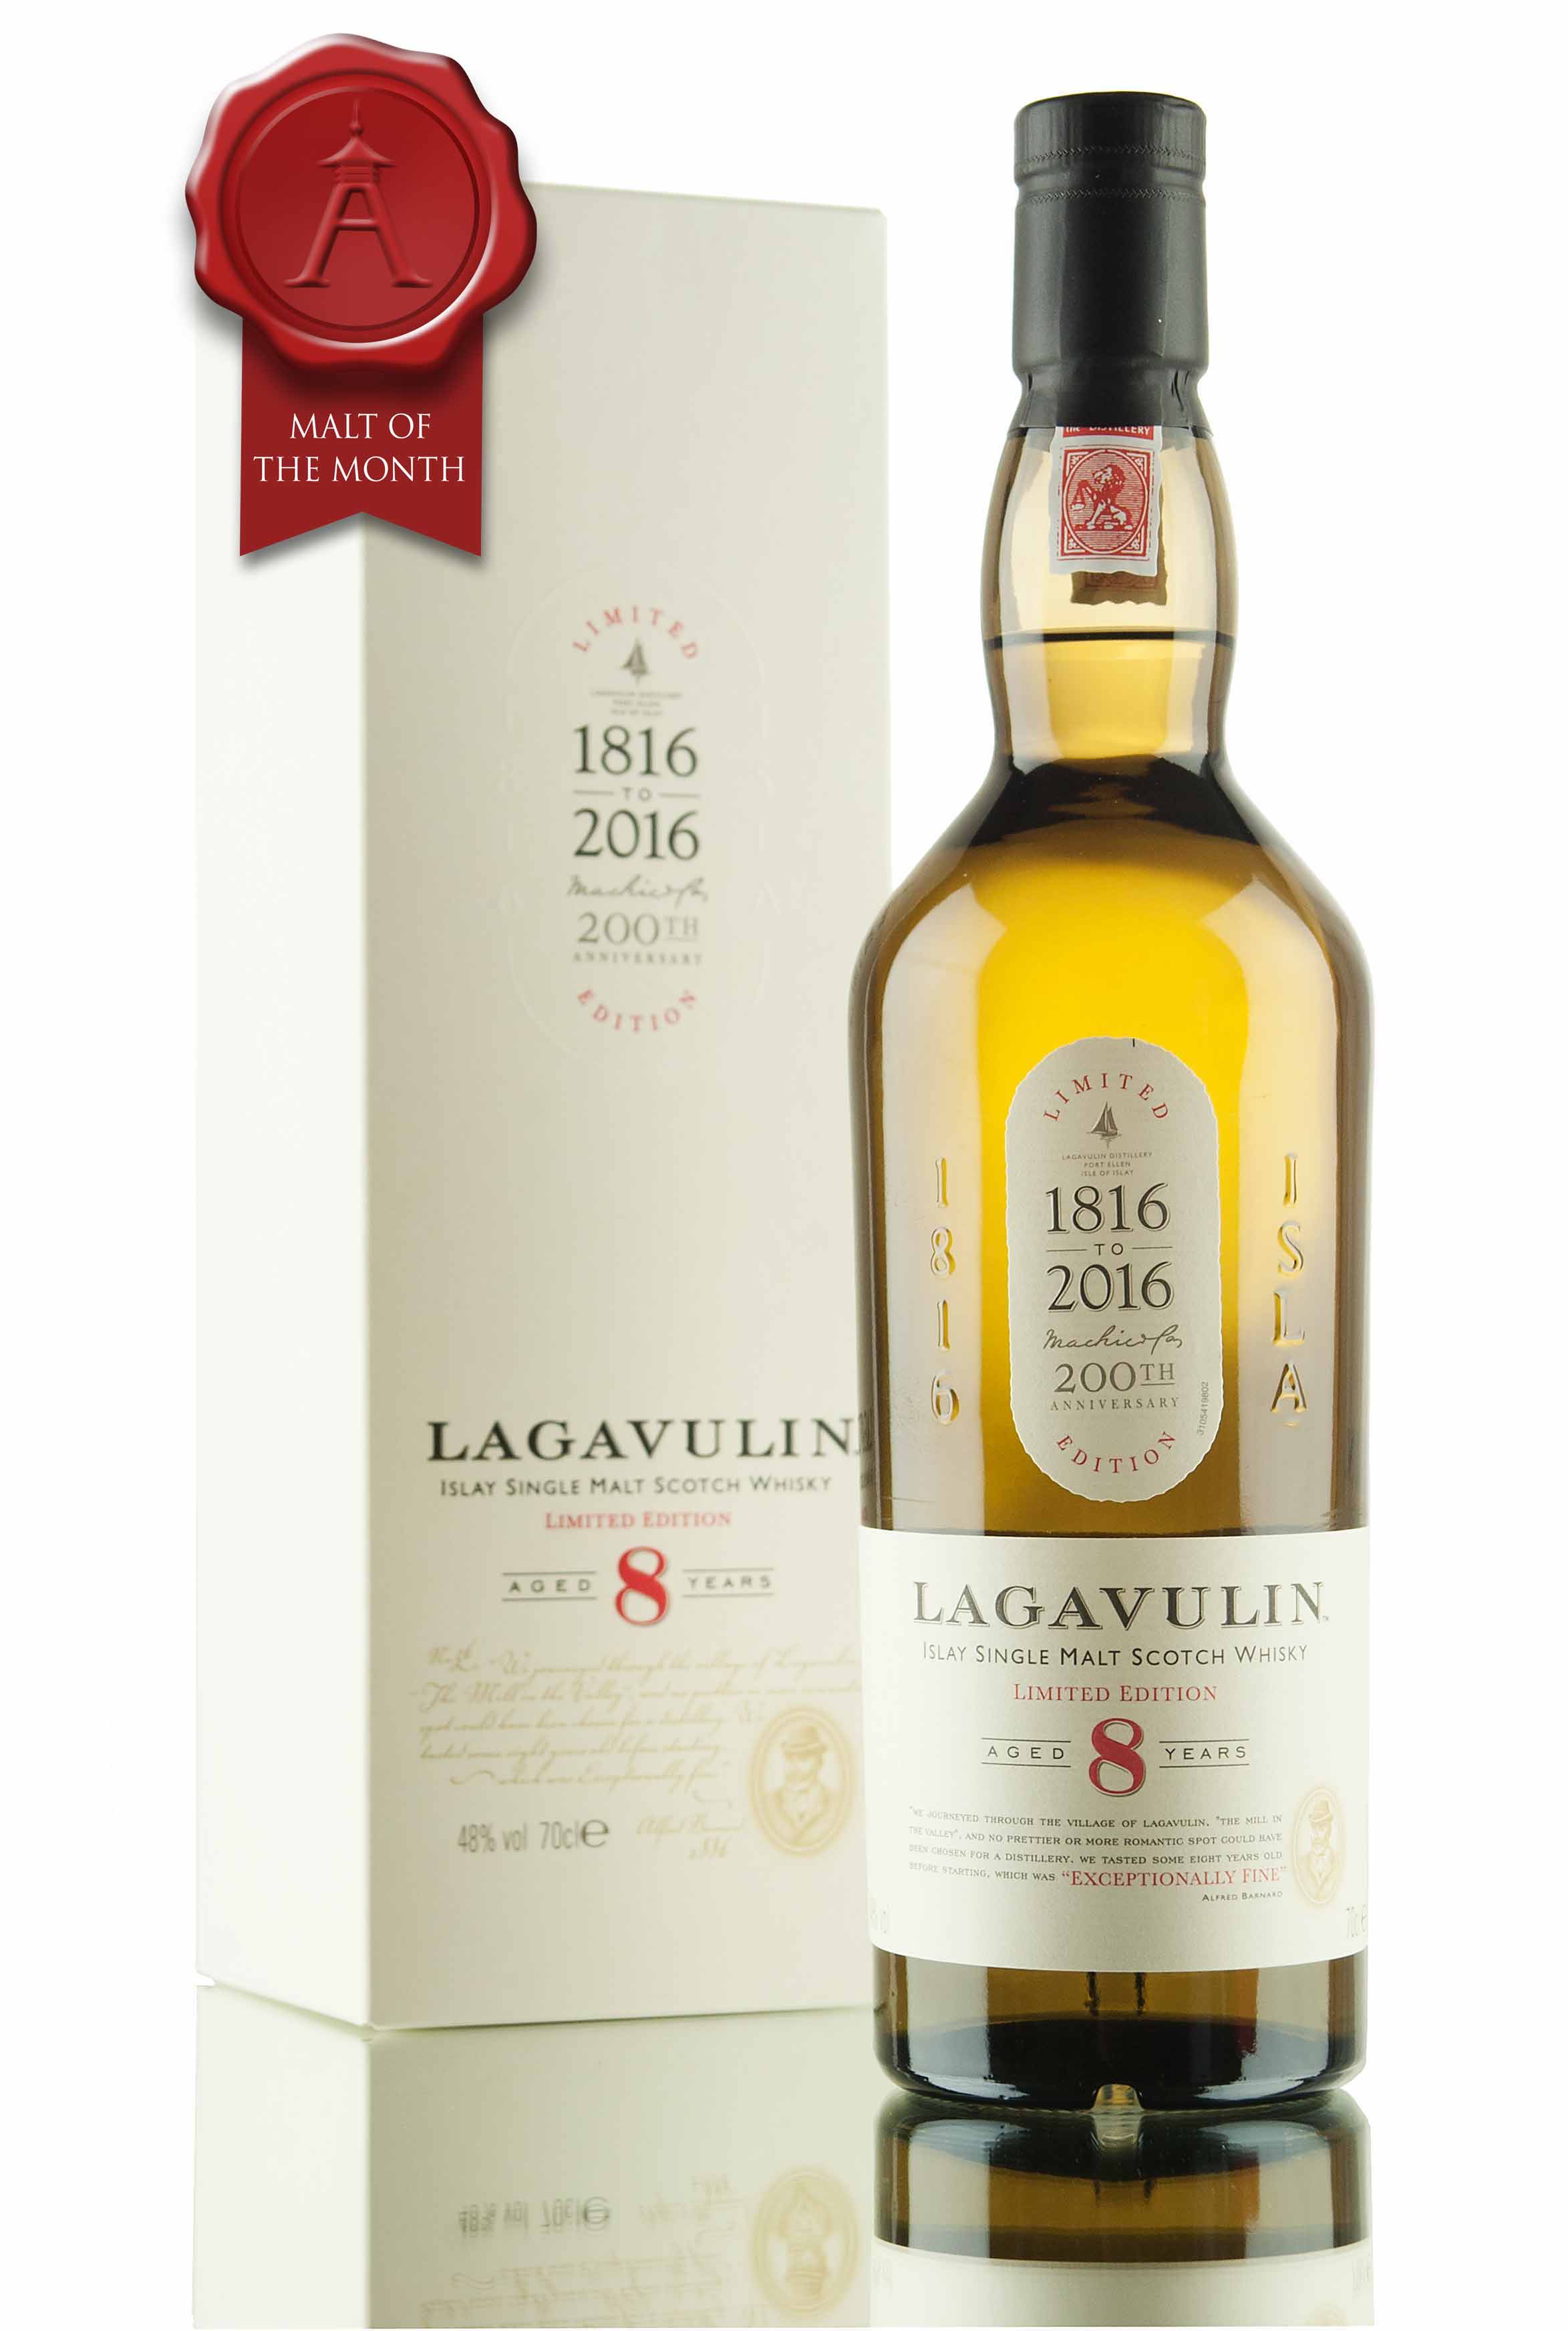 Lagavulin 8 Year Old / 200th Anniversary Edition